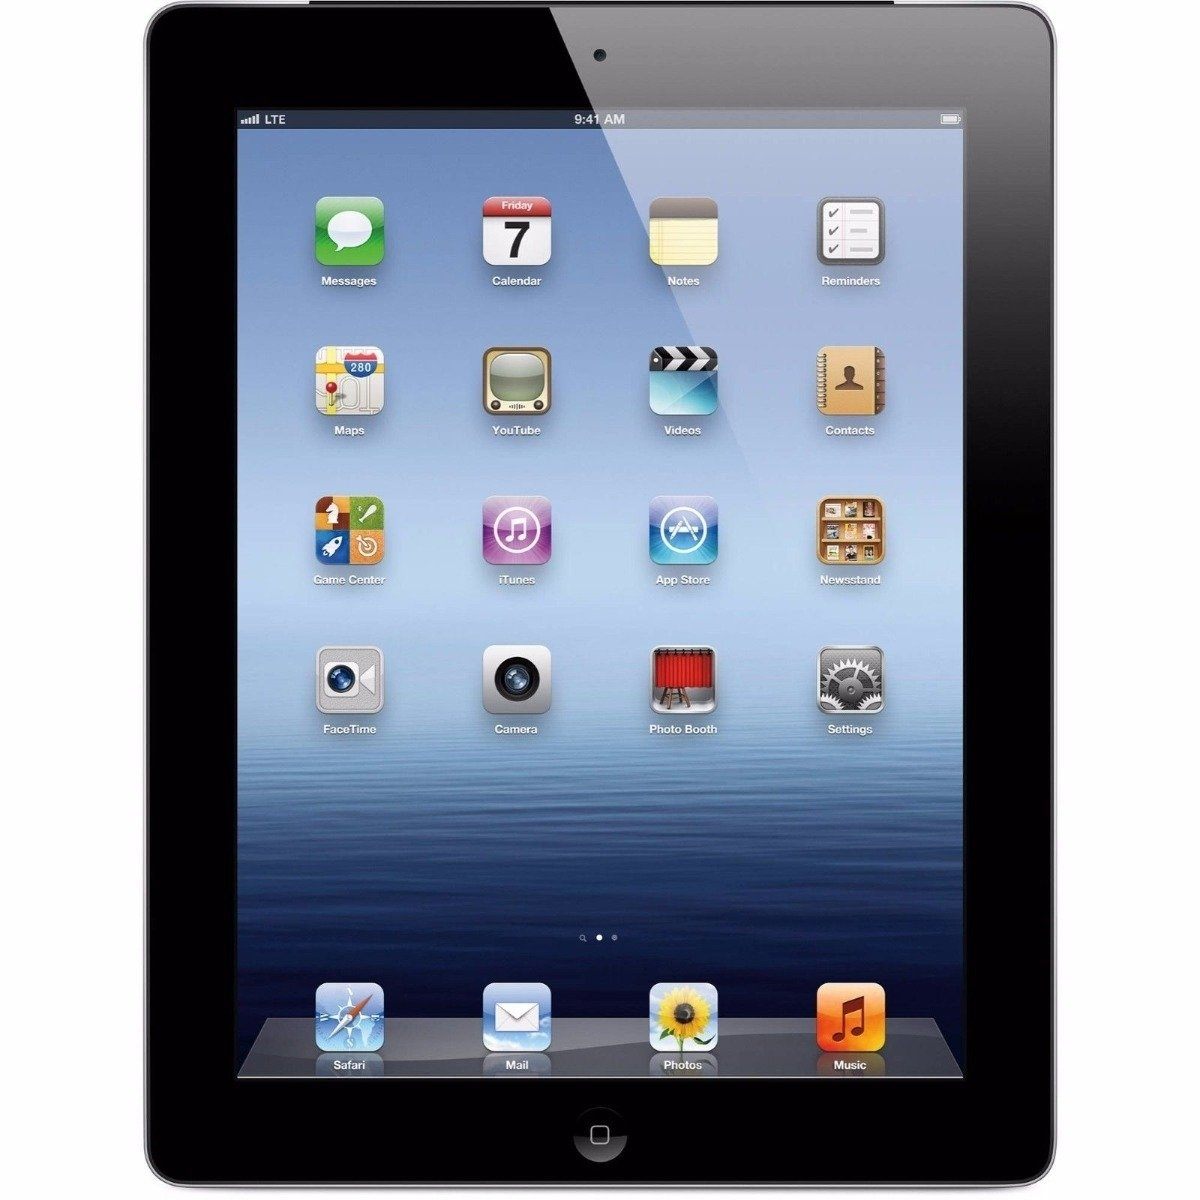 Apple iPad 2 WiFi + Cellular 3G - Fully Unlocked (Refurbished)